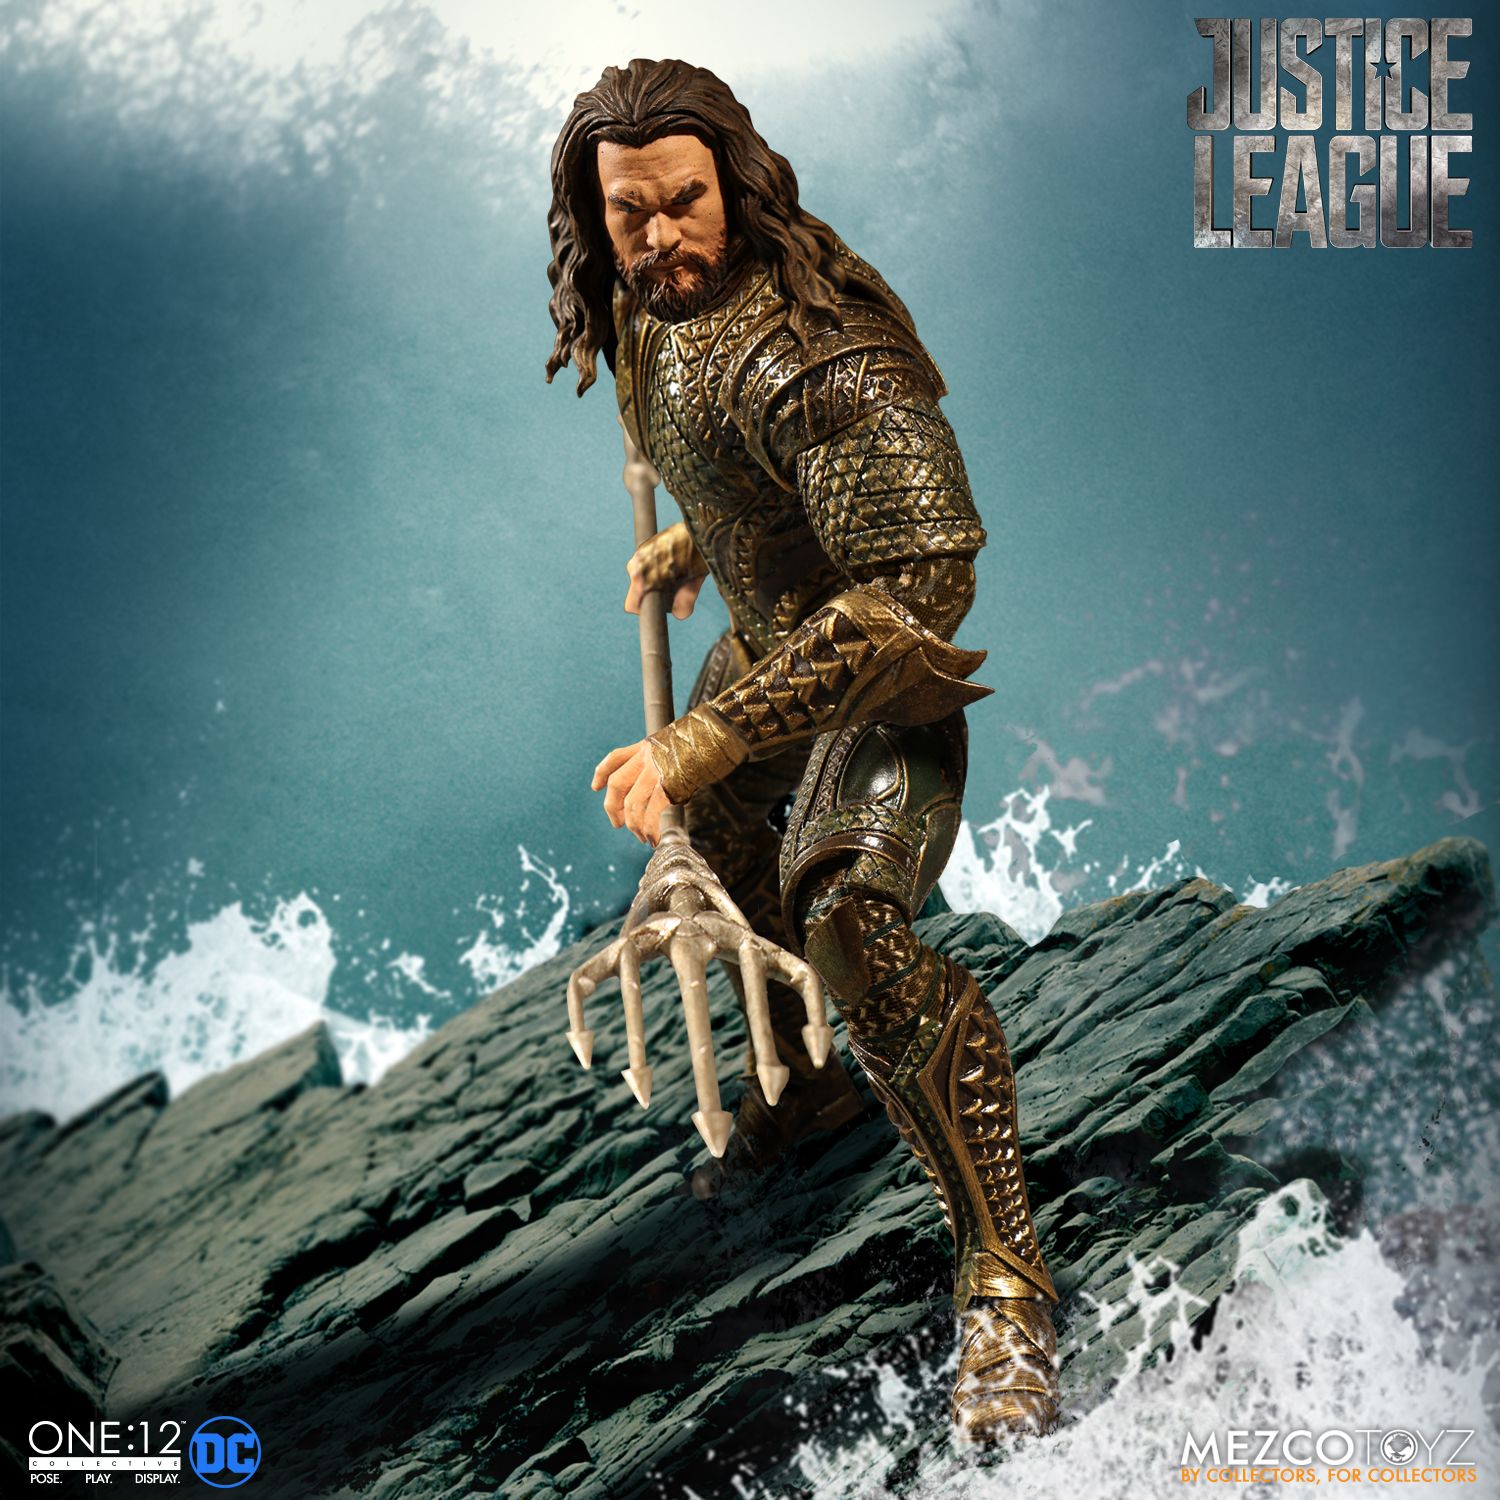 Justice League Aquaman One:12 Collective Action Figure 